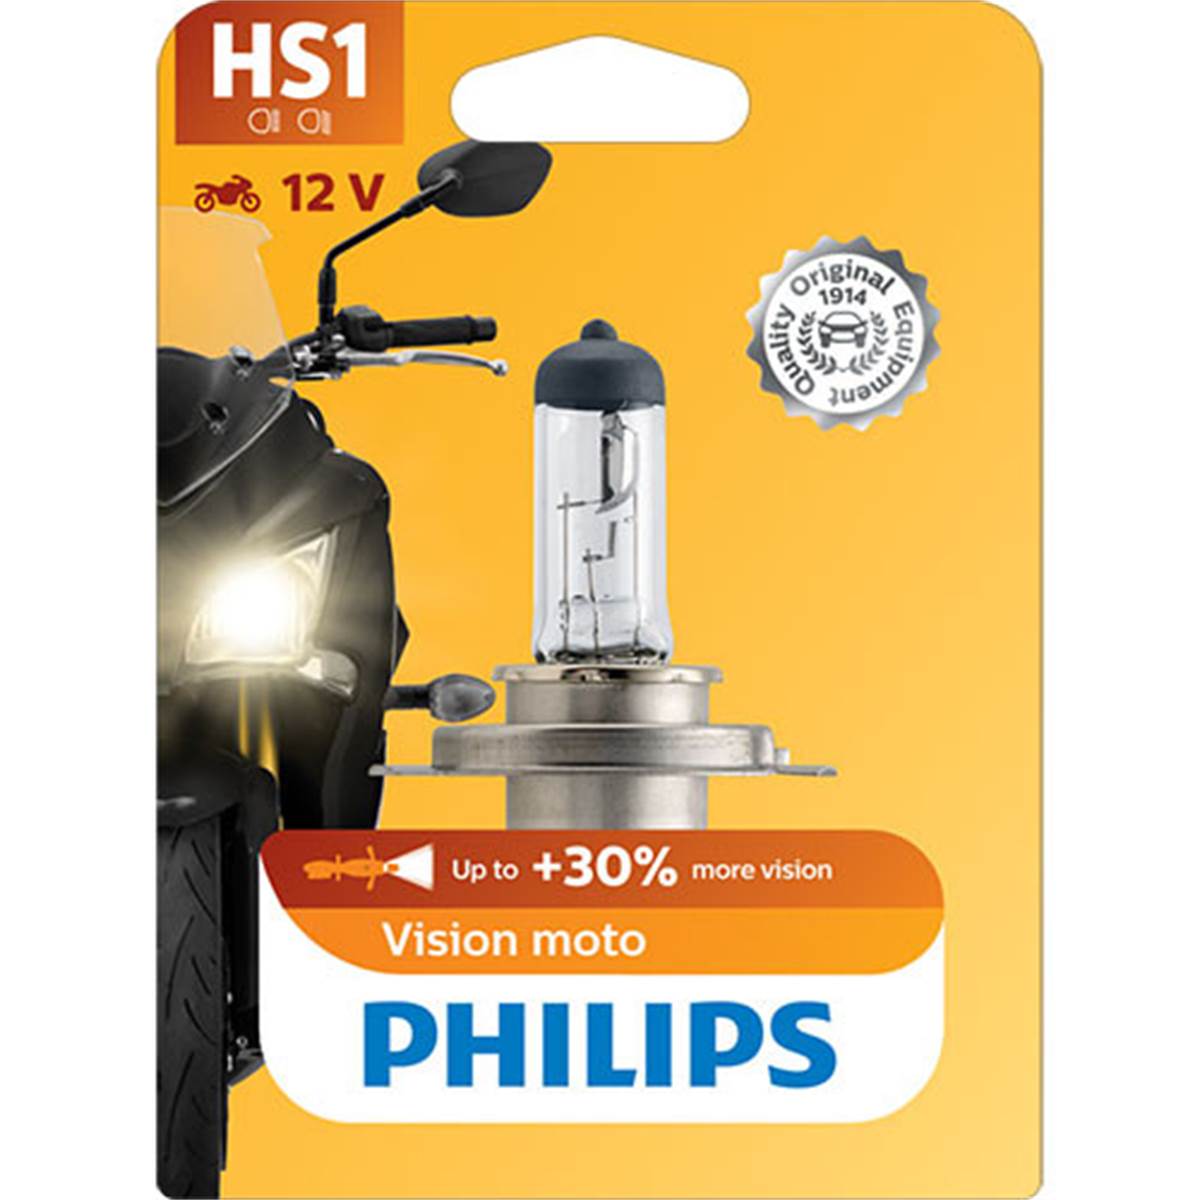 Philips Bombilla hs1  vision 35w 12v 1 ud moto